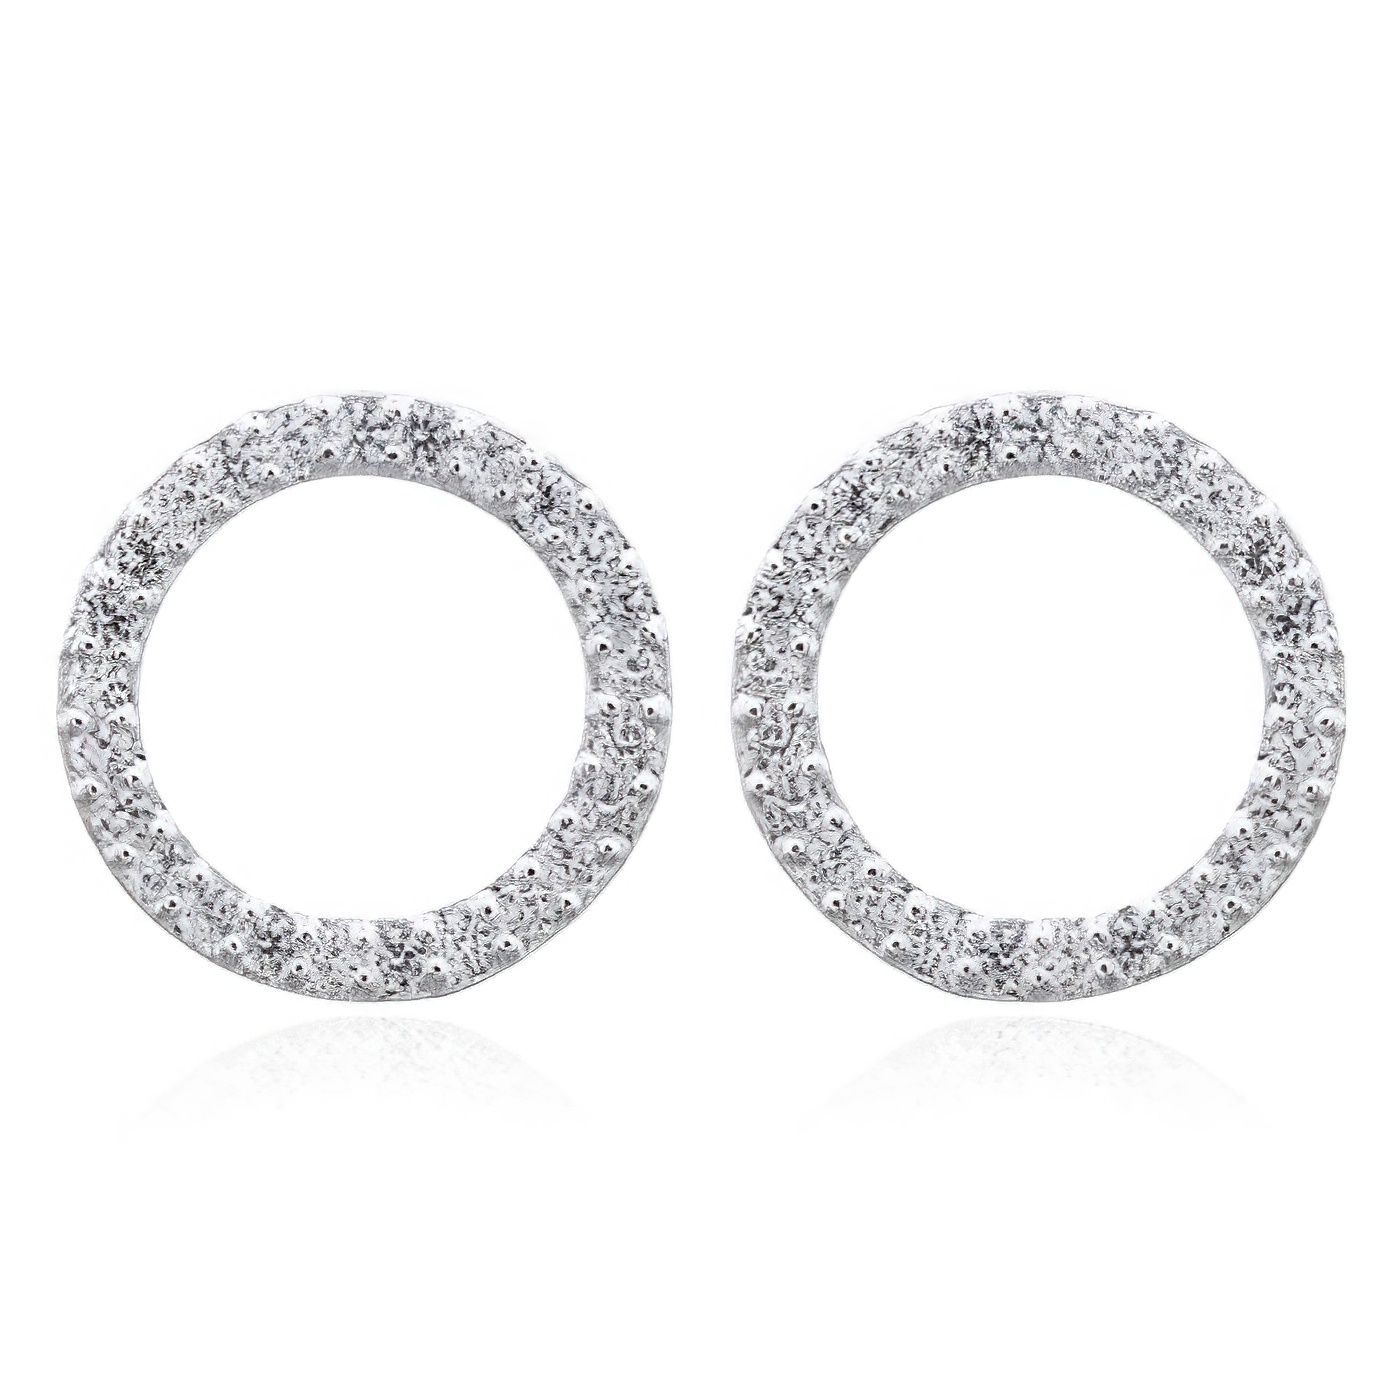 Elegant Circle Cubic Zirconia Stud Earrings 925 Silver by BeYindi 